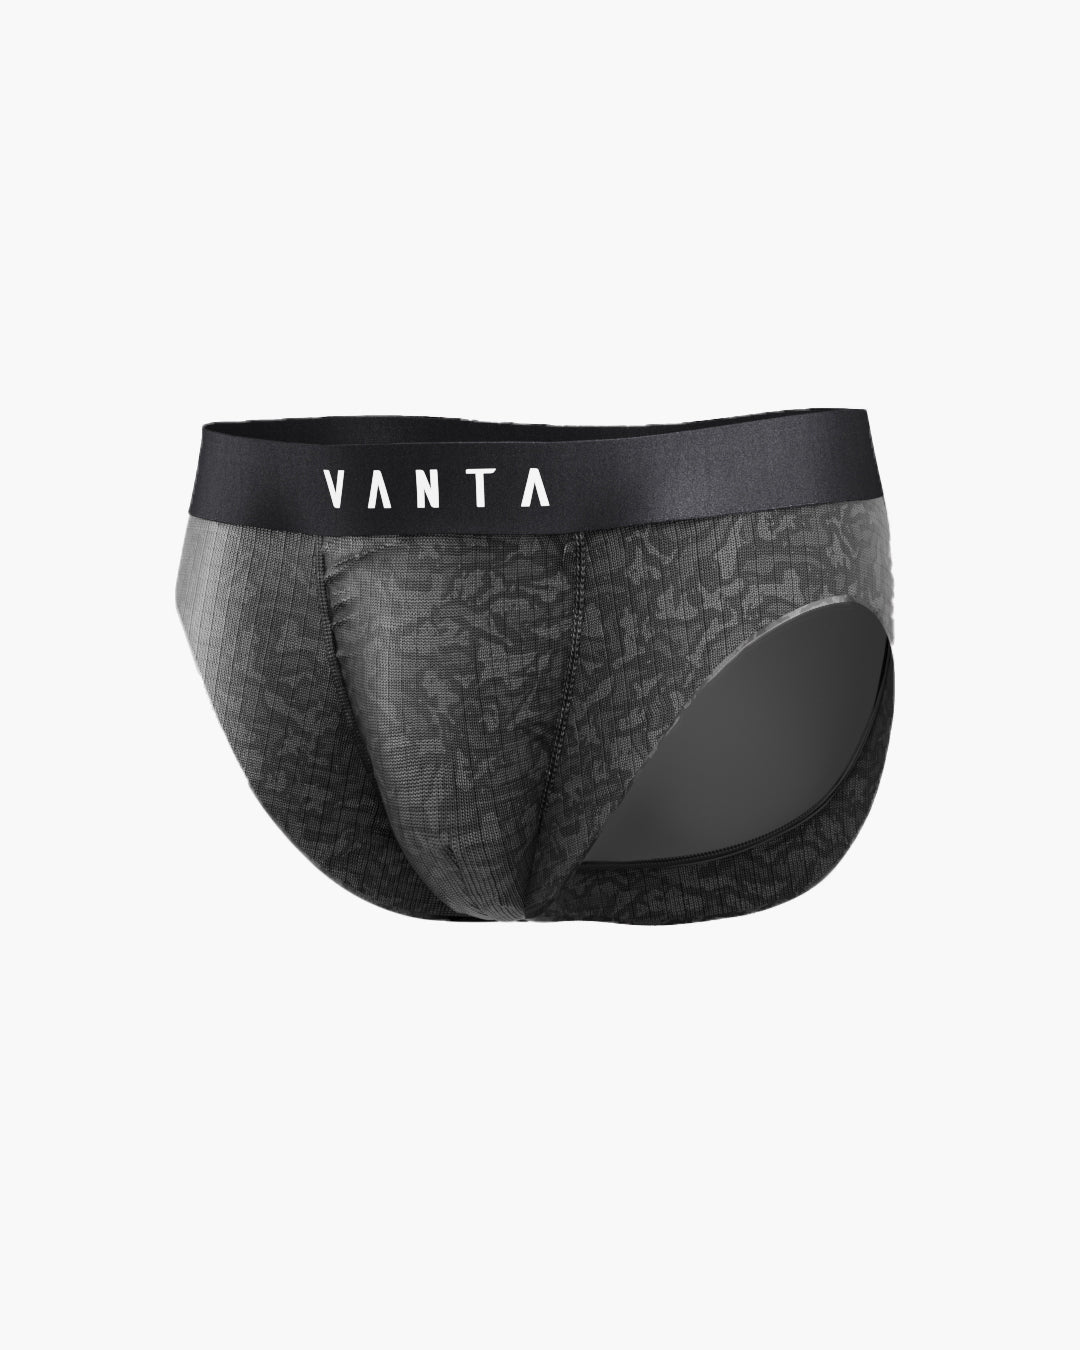 VANTA Underwear | Kanga Pouch Tech | Never Adjust Again